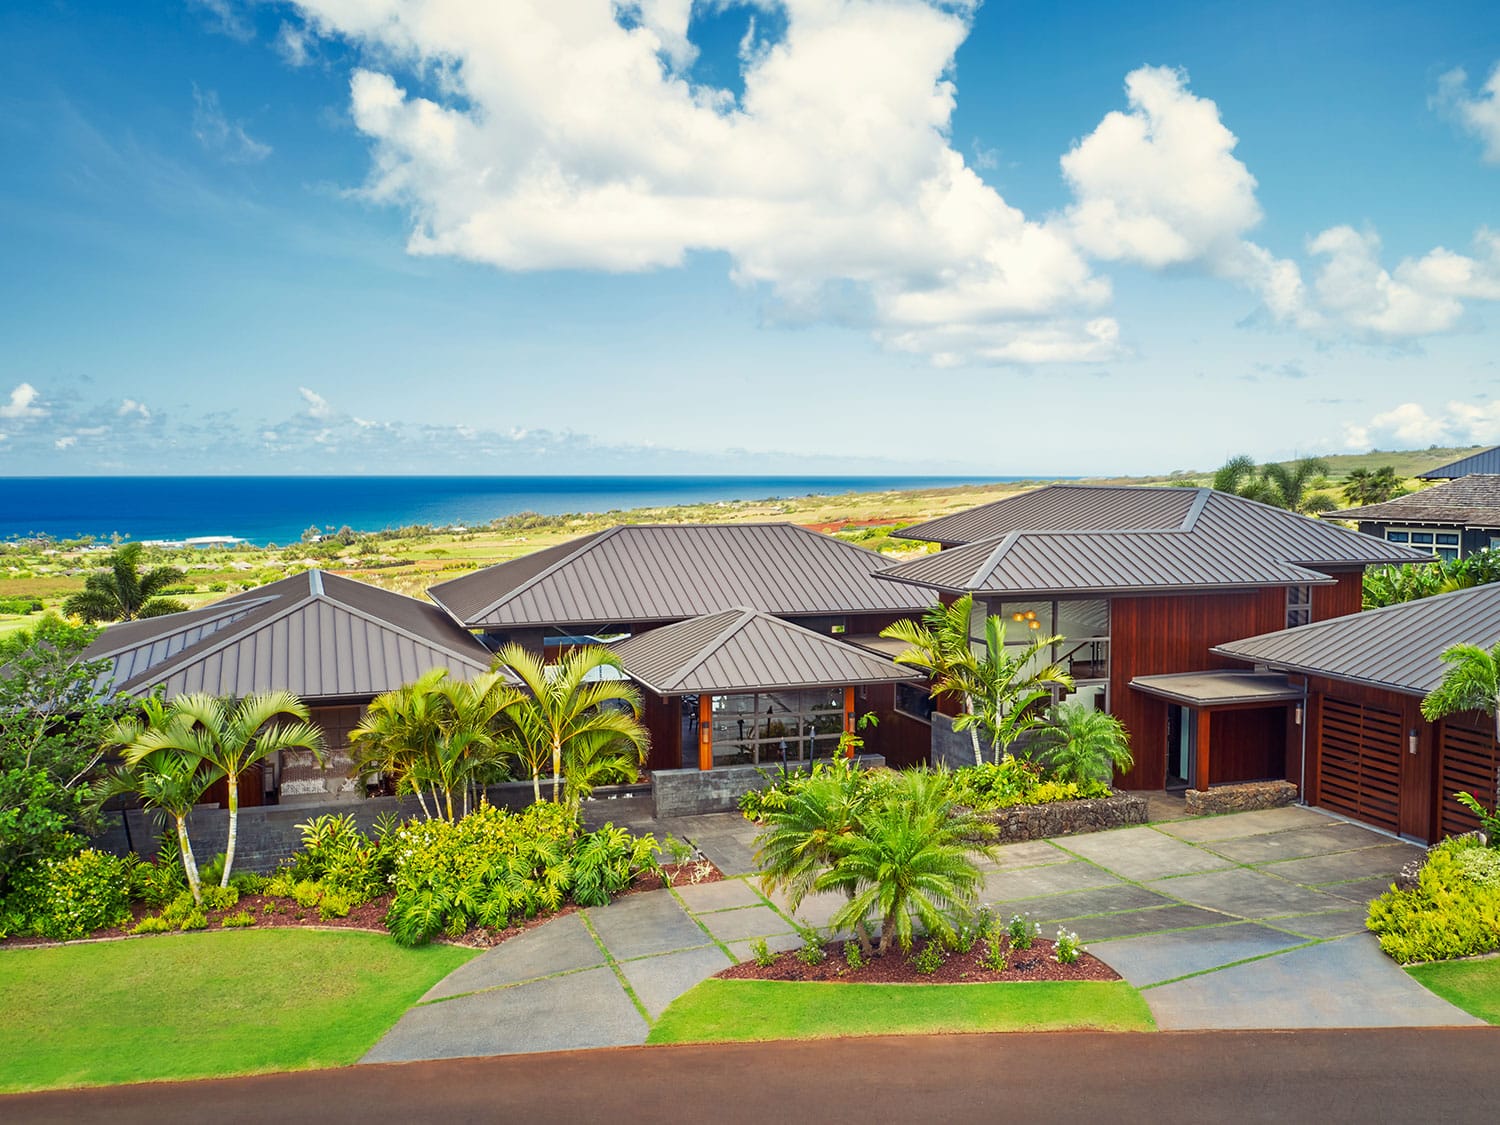 A beach resort home on Hawaii's Kauai.